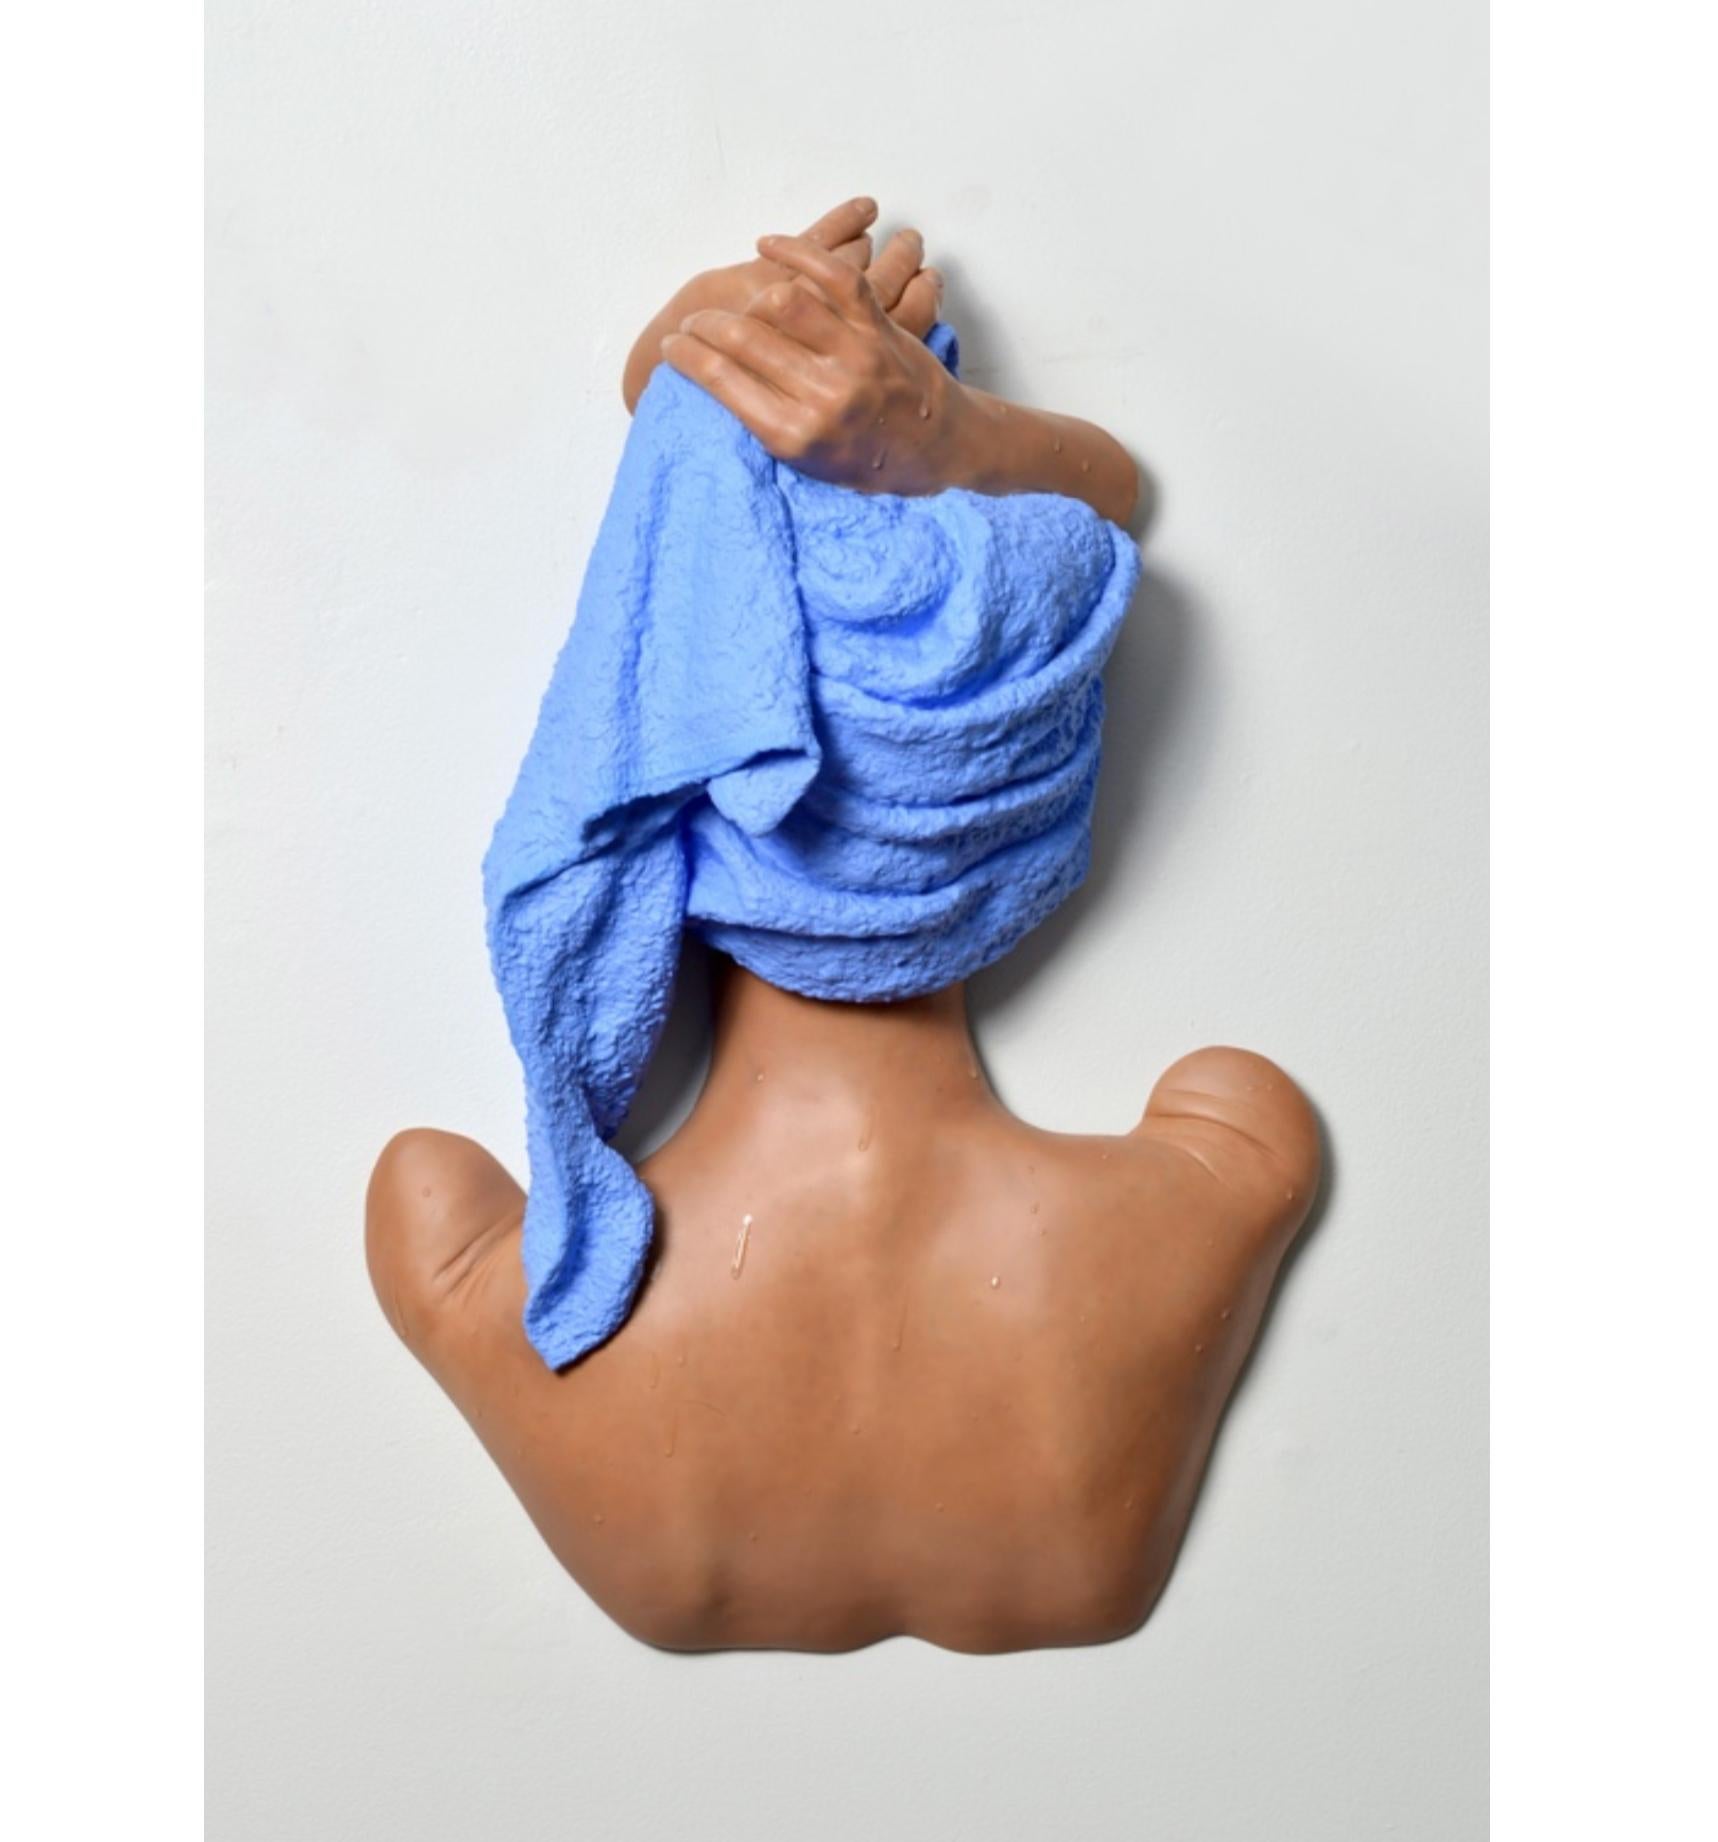 Hands on Towel - Sculpture by Carole Feuerman